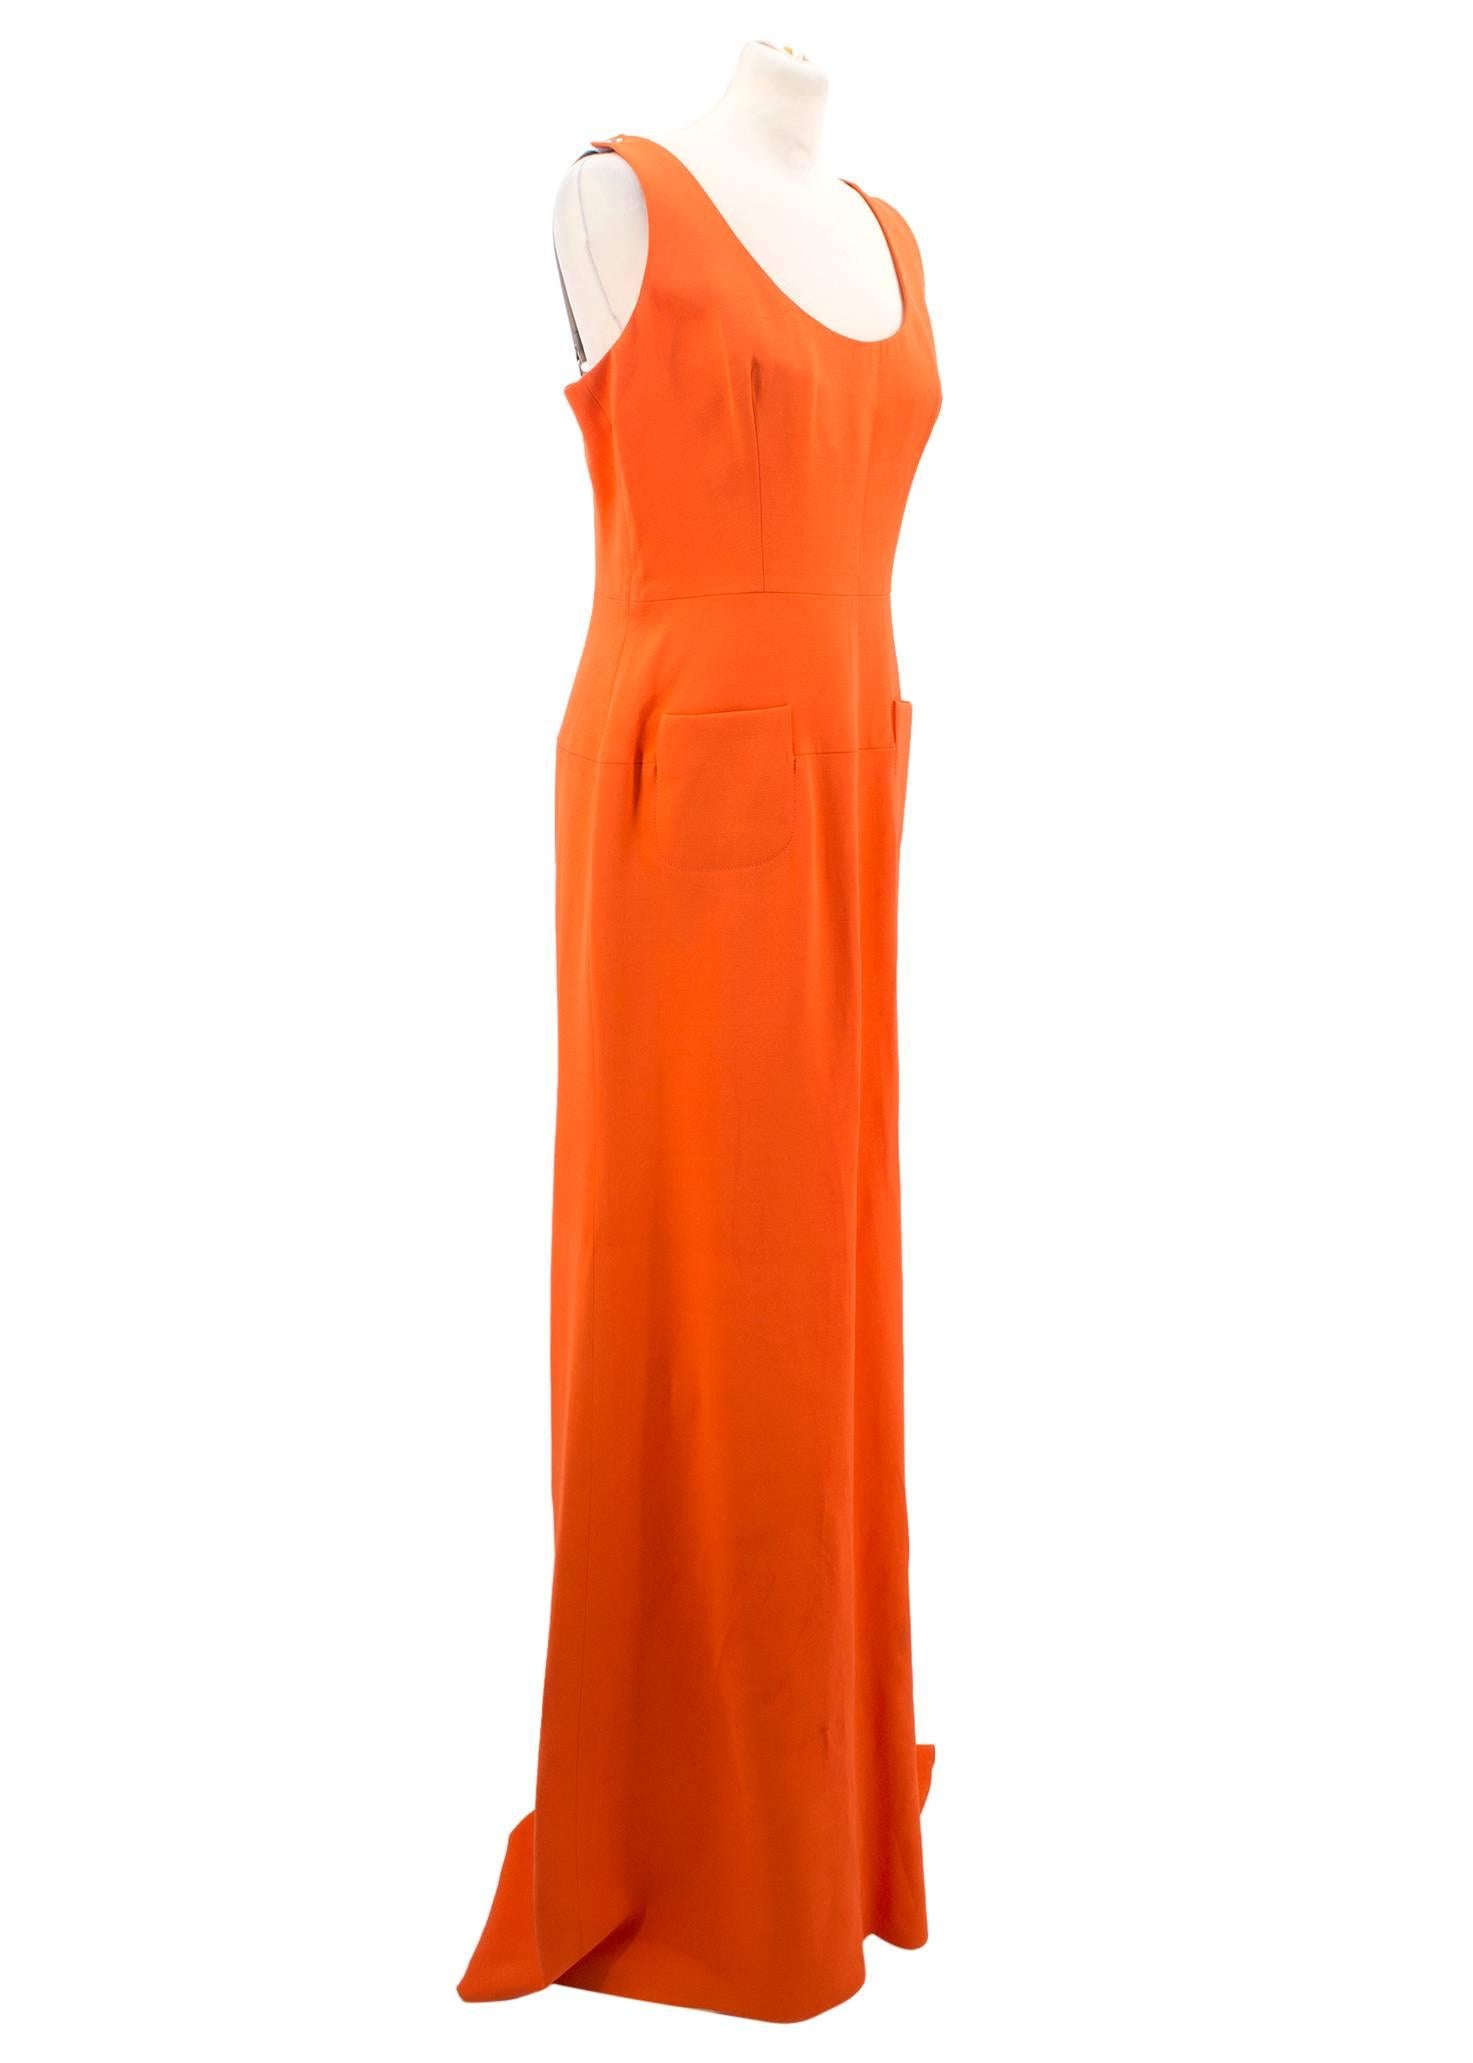 Victoria Beckham Tangerine Scoop Neck Gown (Size: US 10/L)  For Sale 5